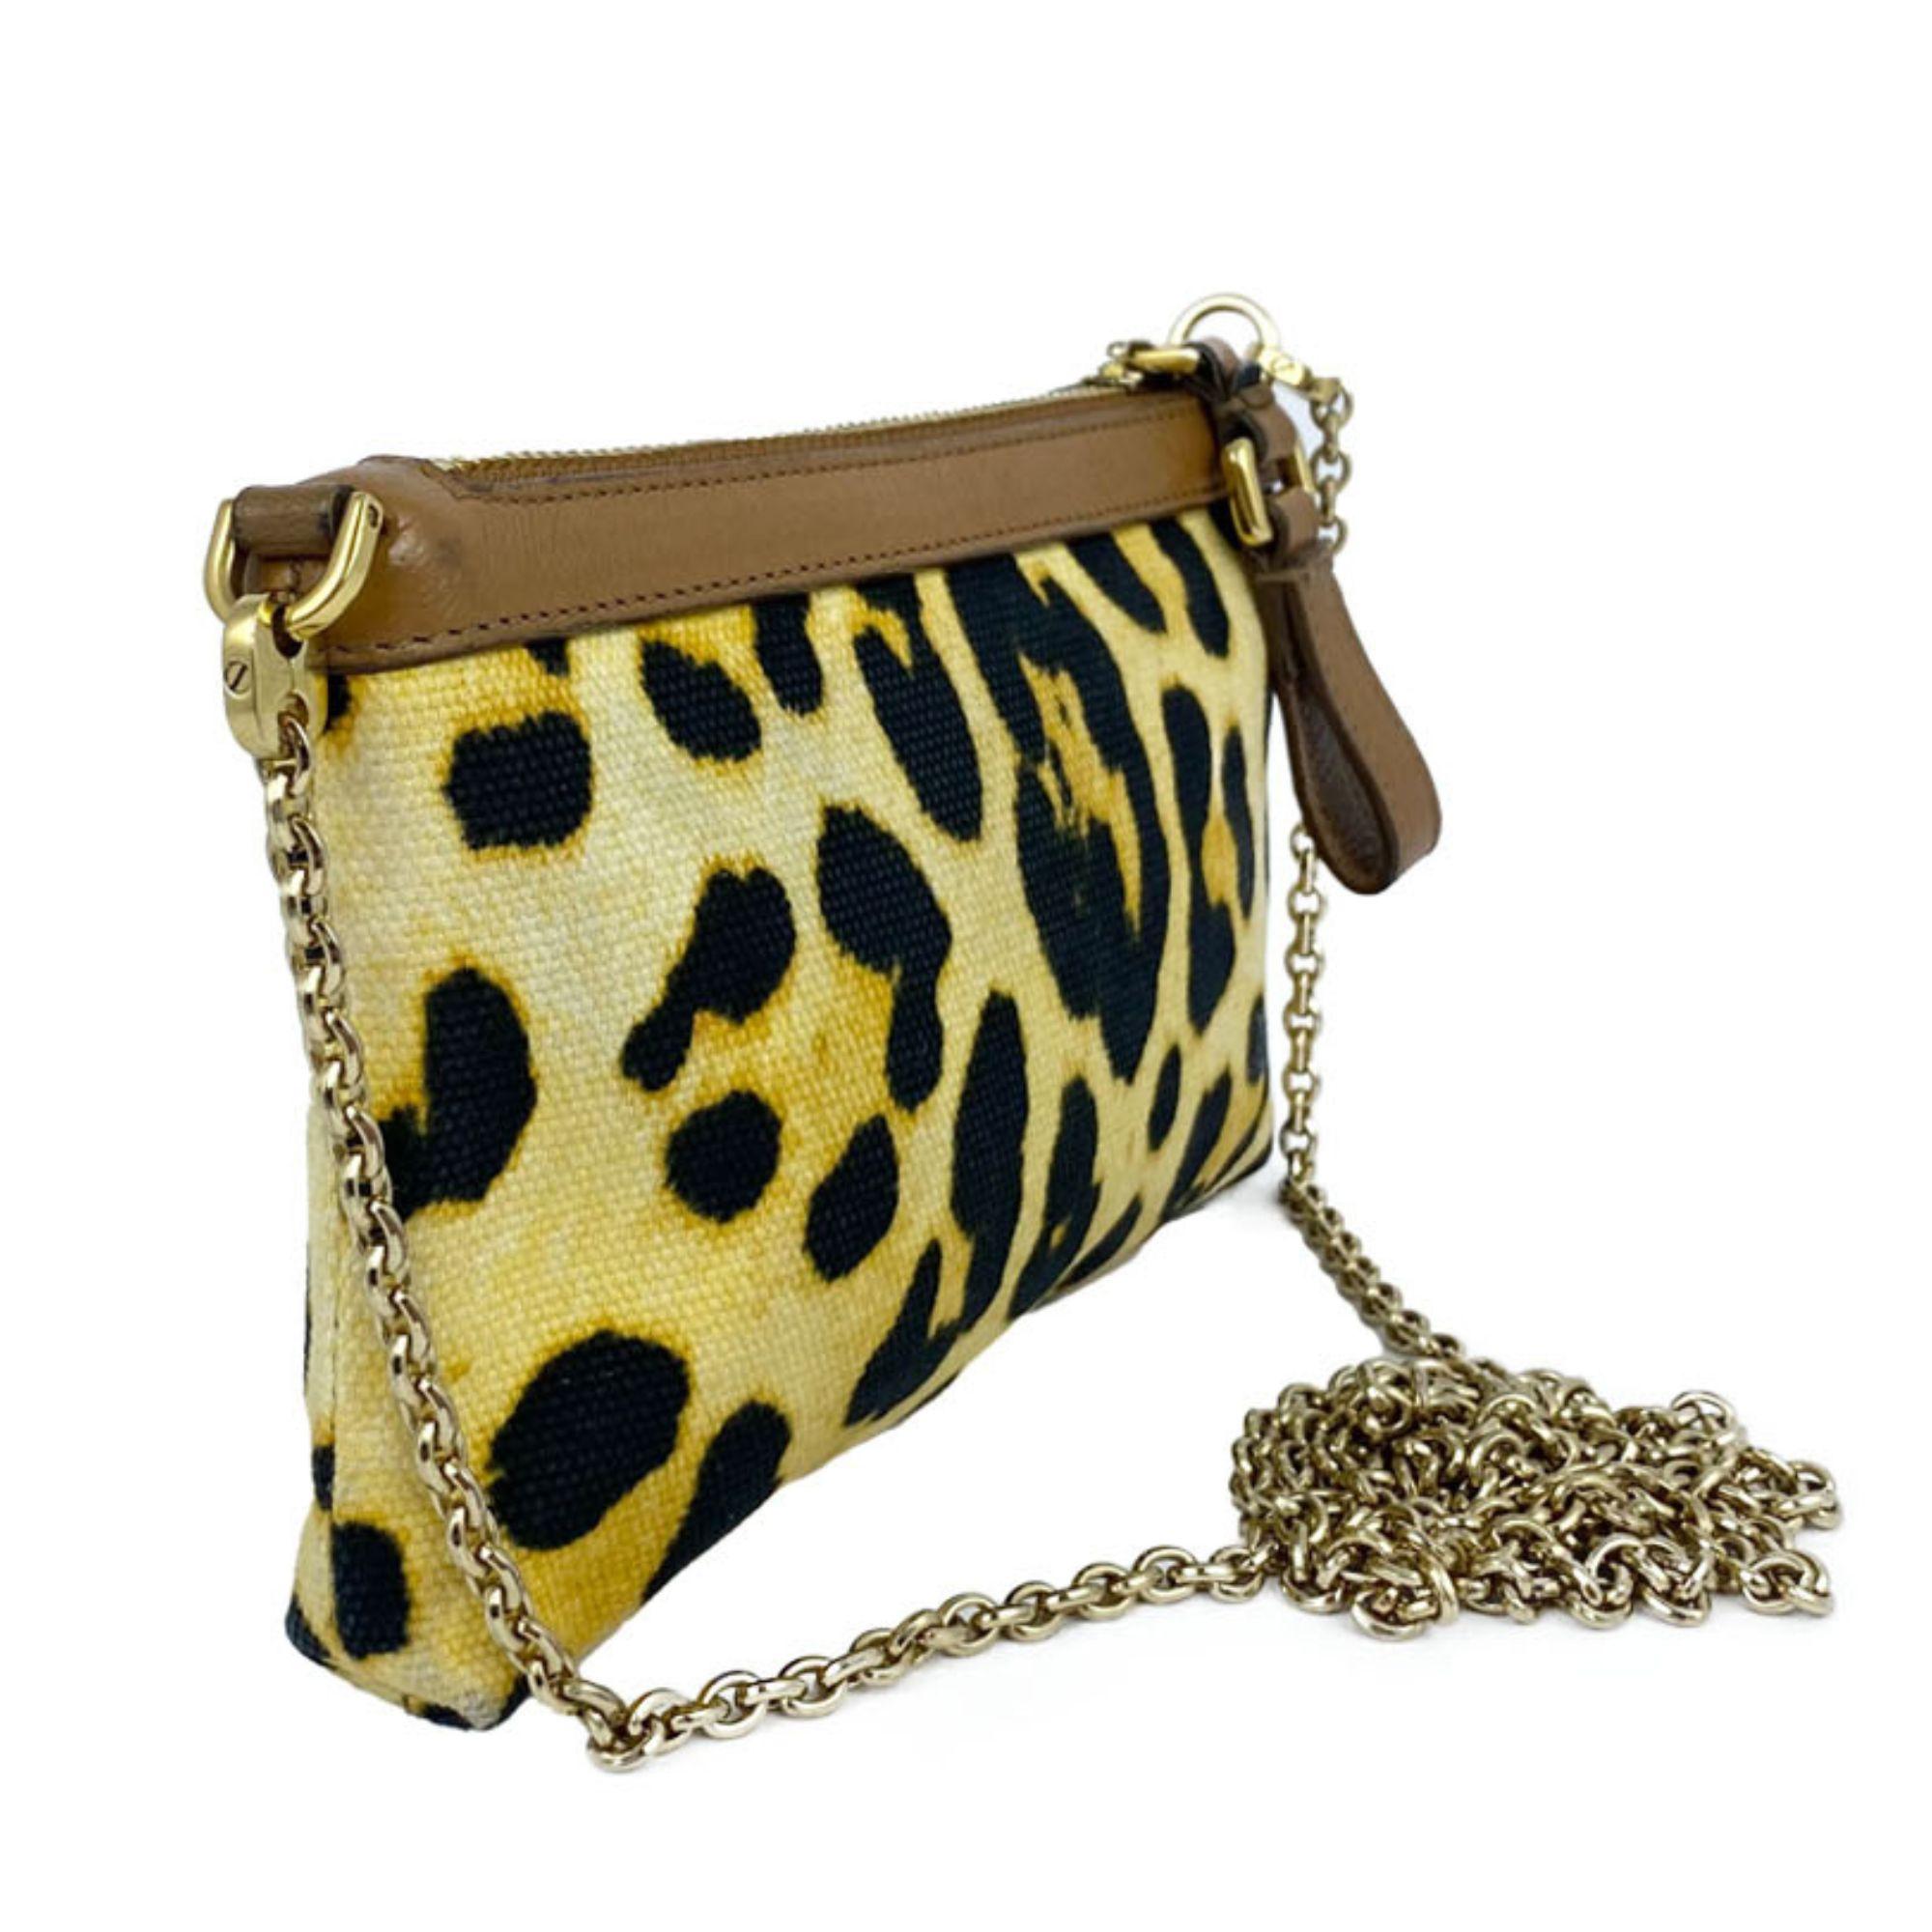 Dolce & Gabbana Leopard Print Crossbody Bag In Good Condition For Sale In Amman, JO